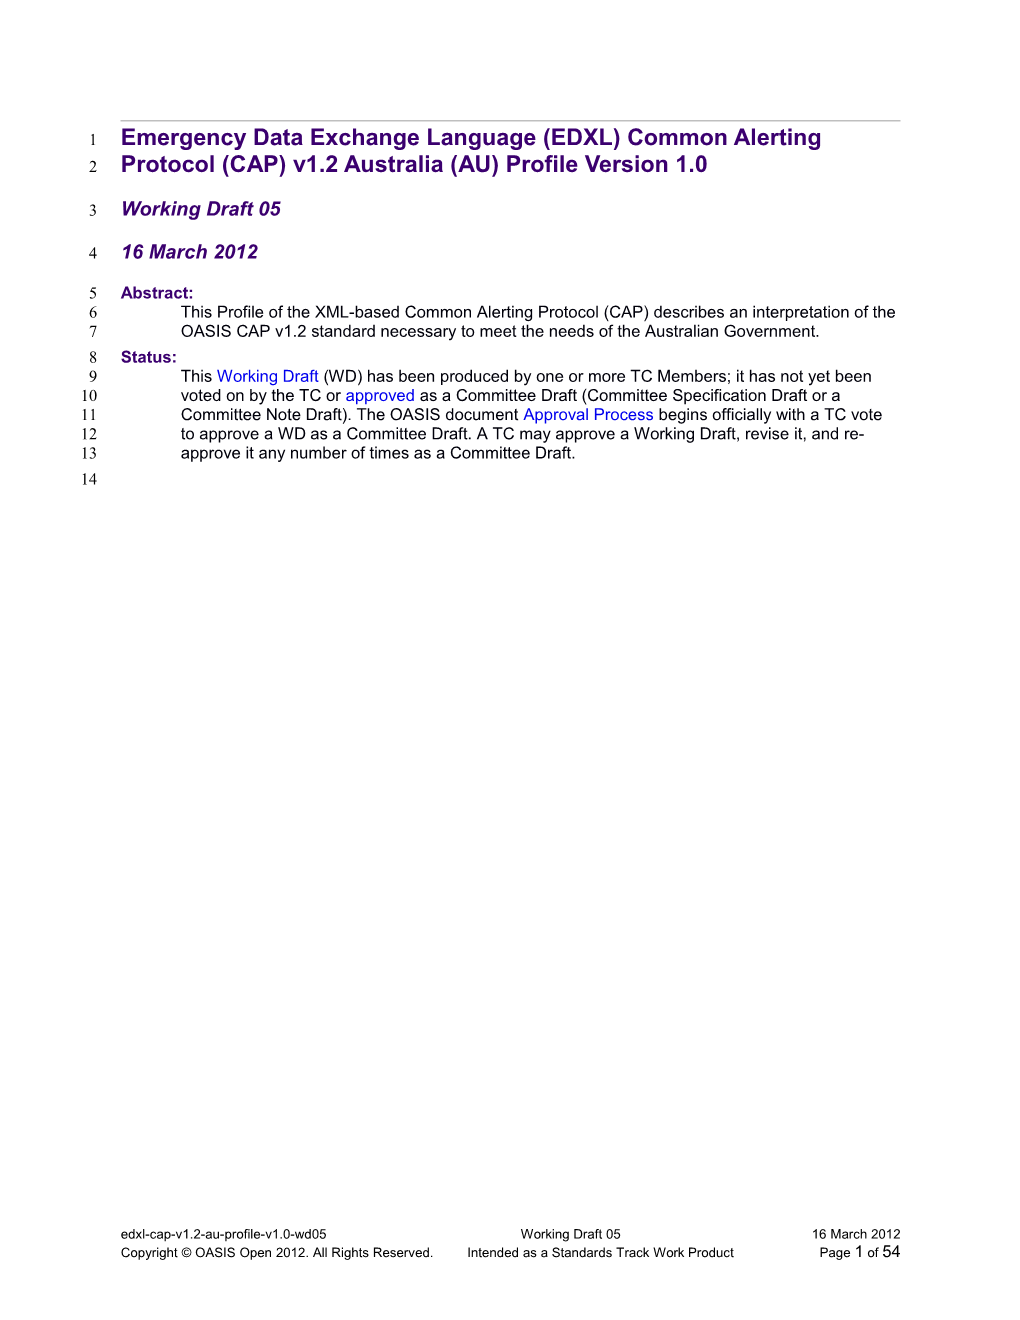 Emergency Data Exchange Language (EDXL) Common Alerting Protocol (CAP) V1.2 Australia (AU)